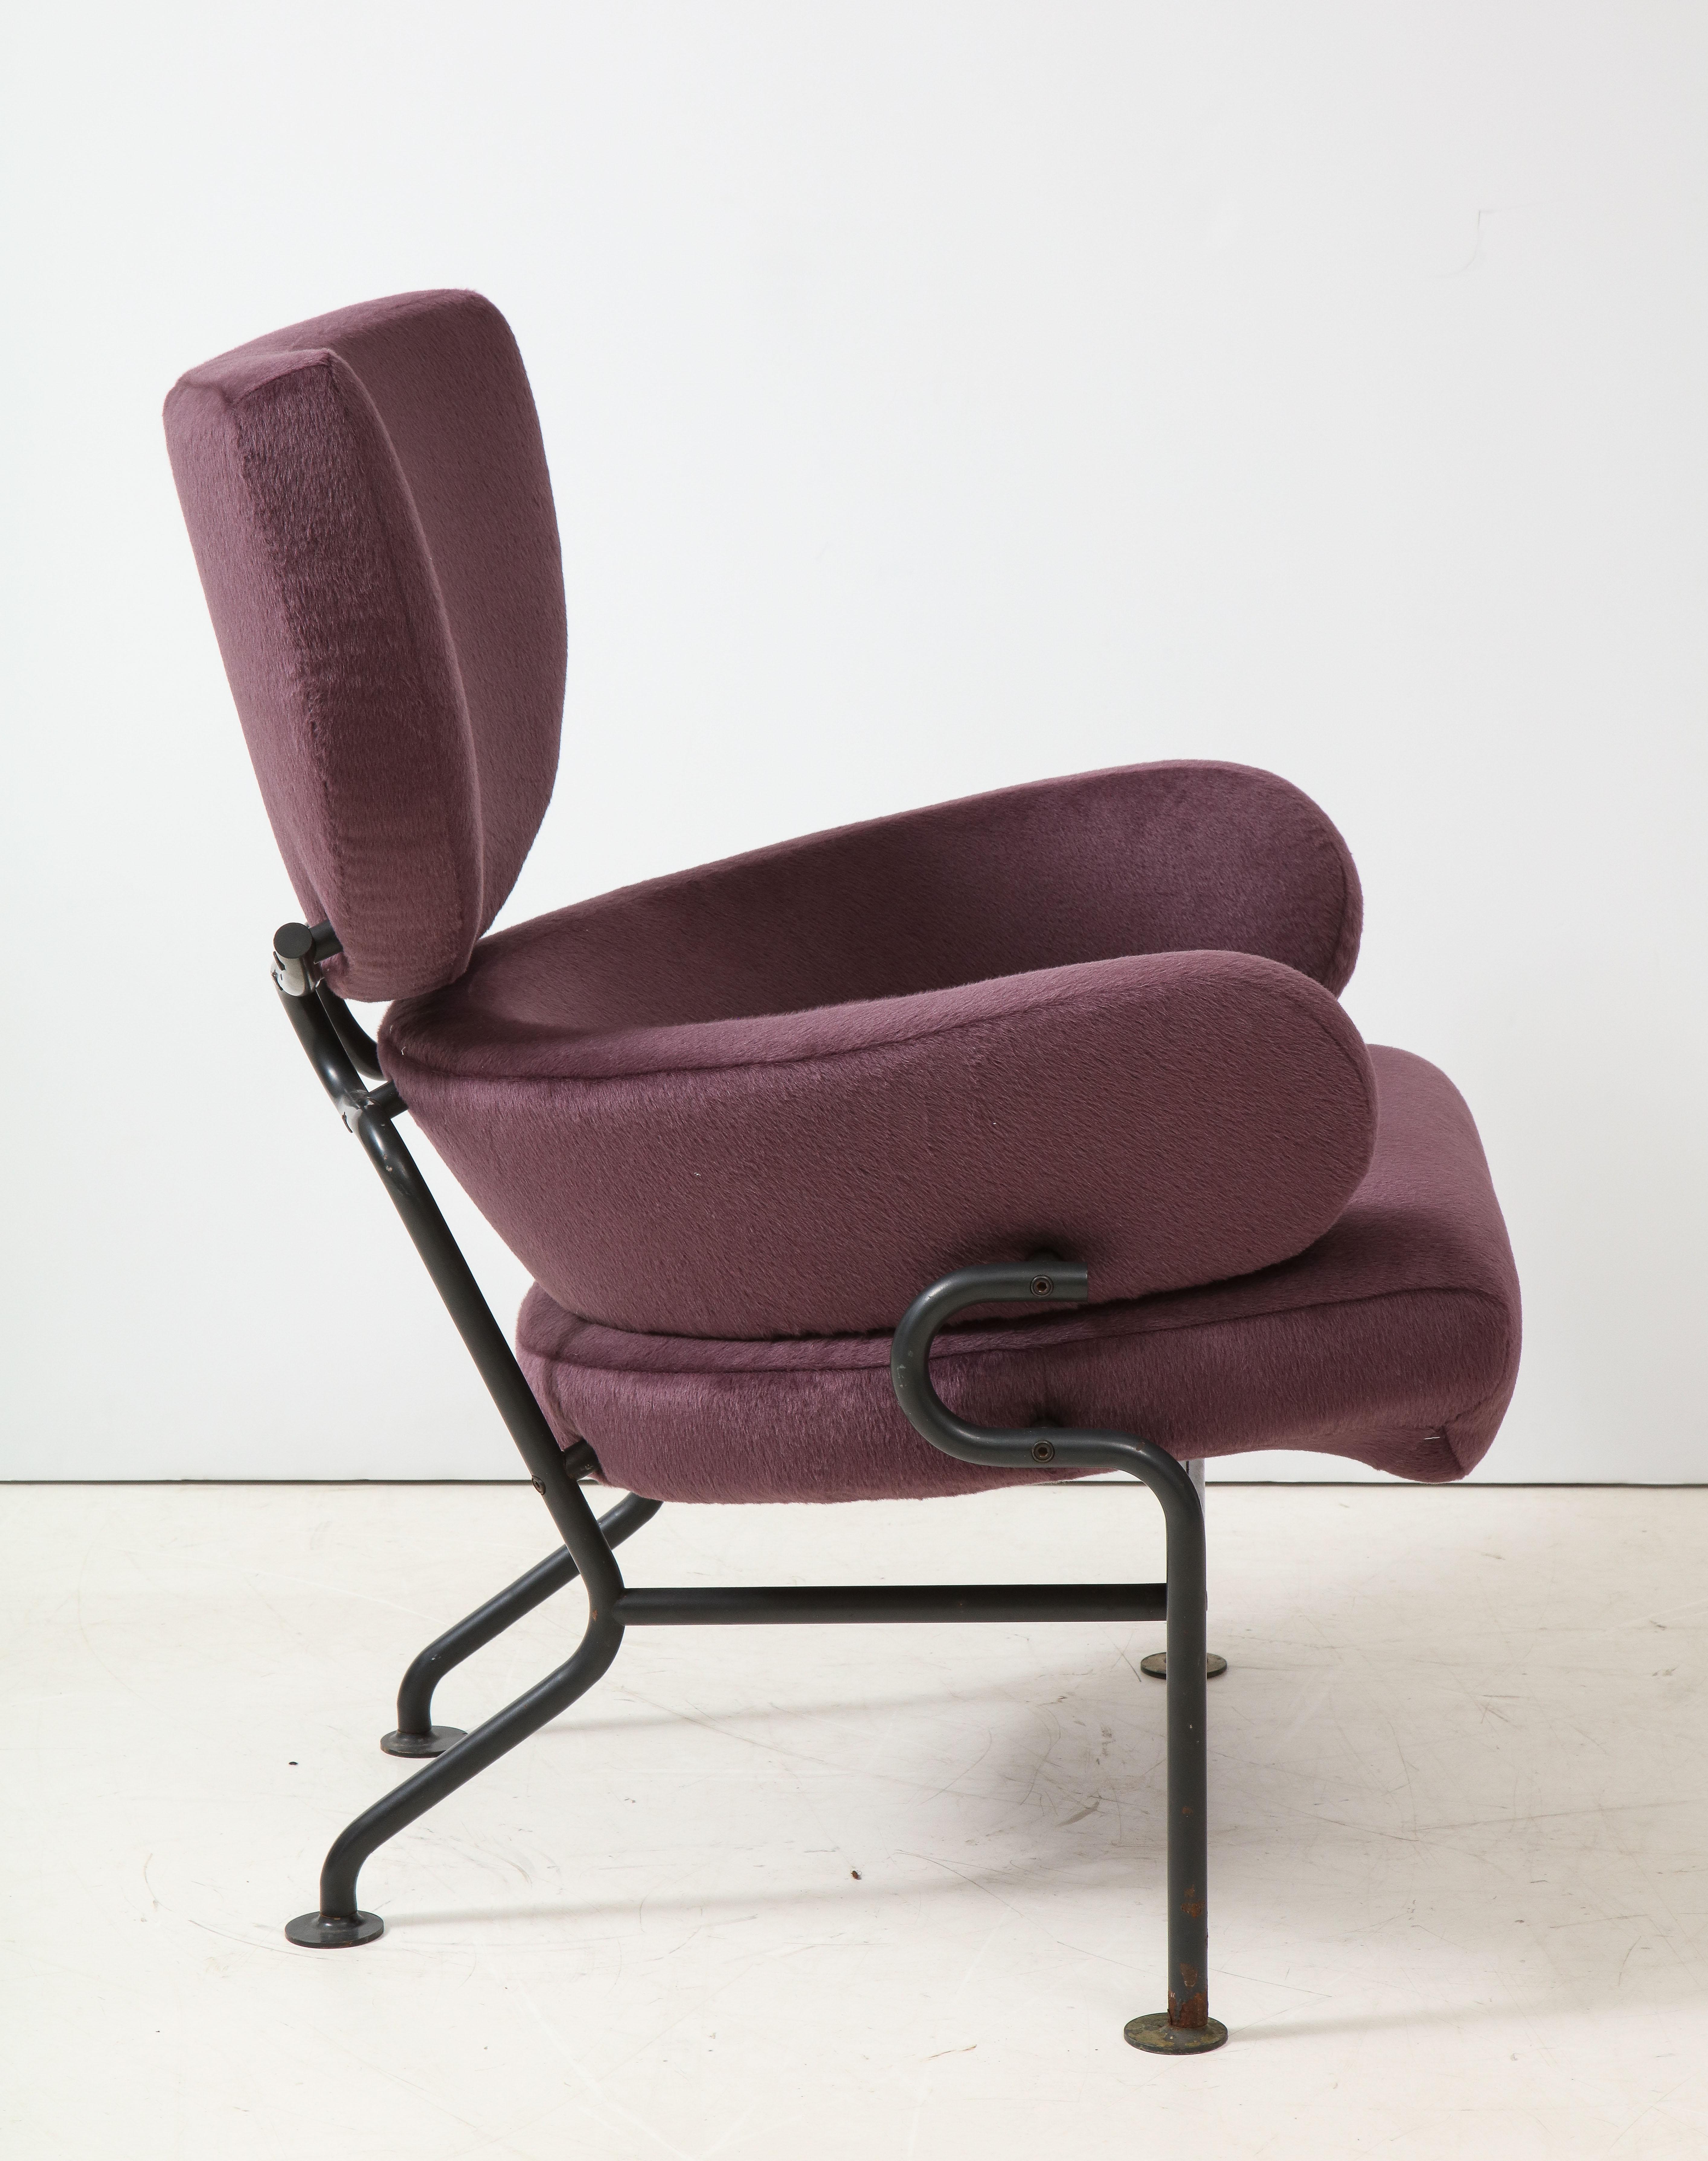 Purple Alpaca Model Pl 19 Armchair by Franco Albini, Italy, c. 1959 For Sale 1